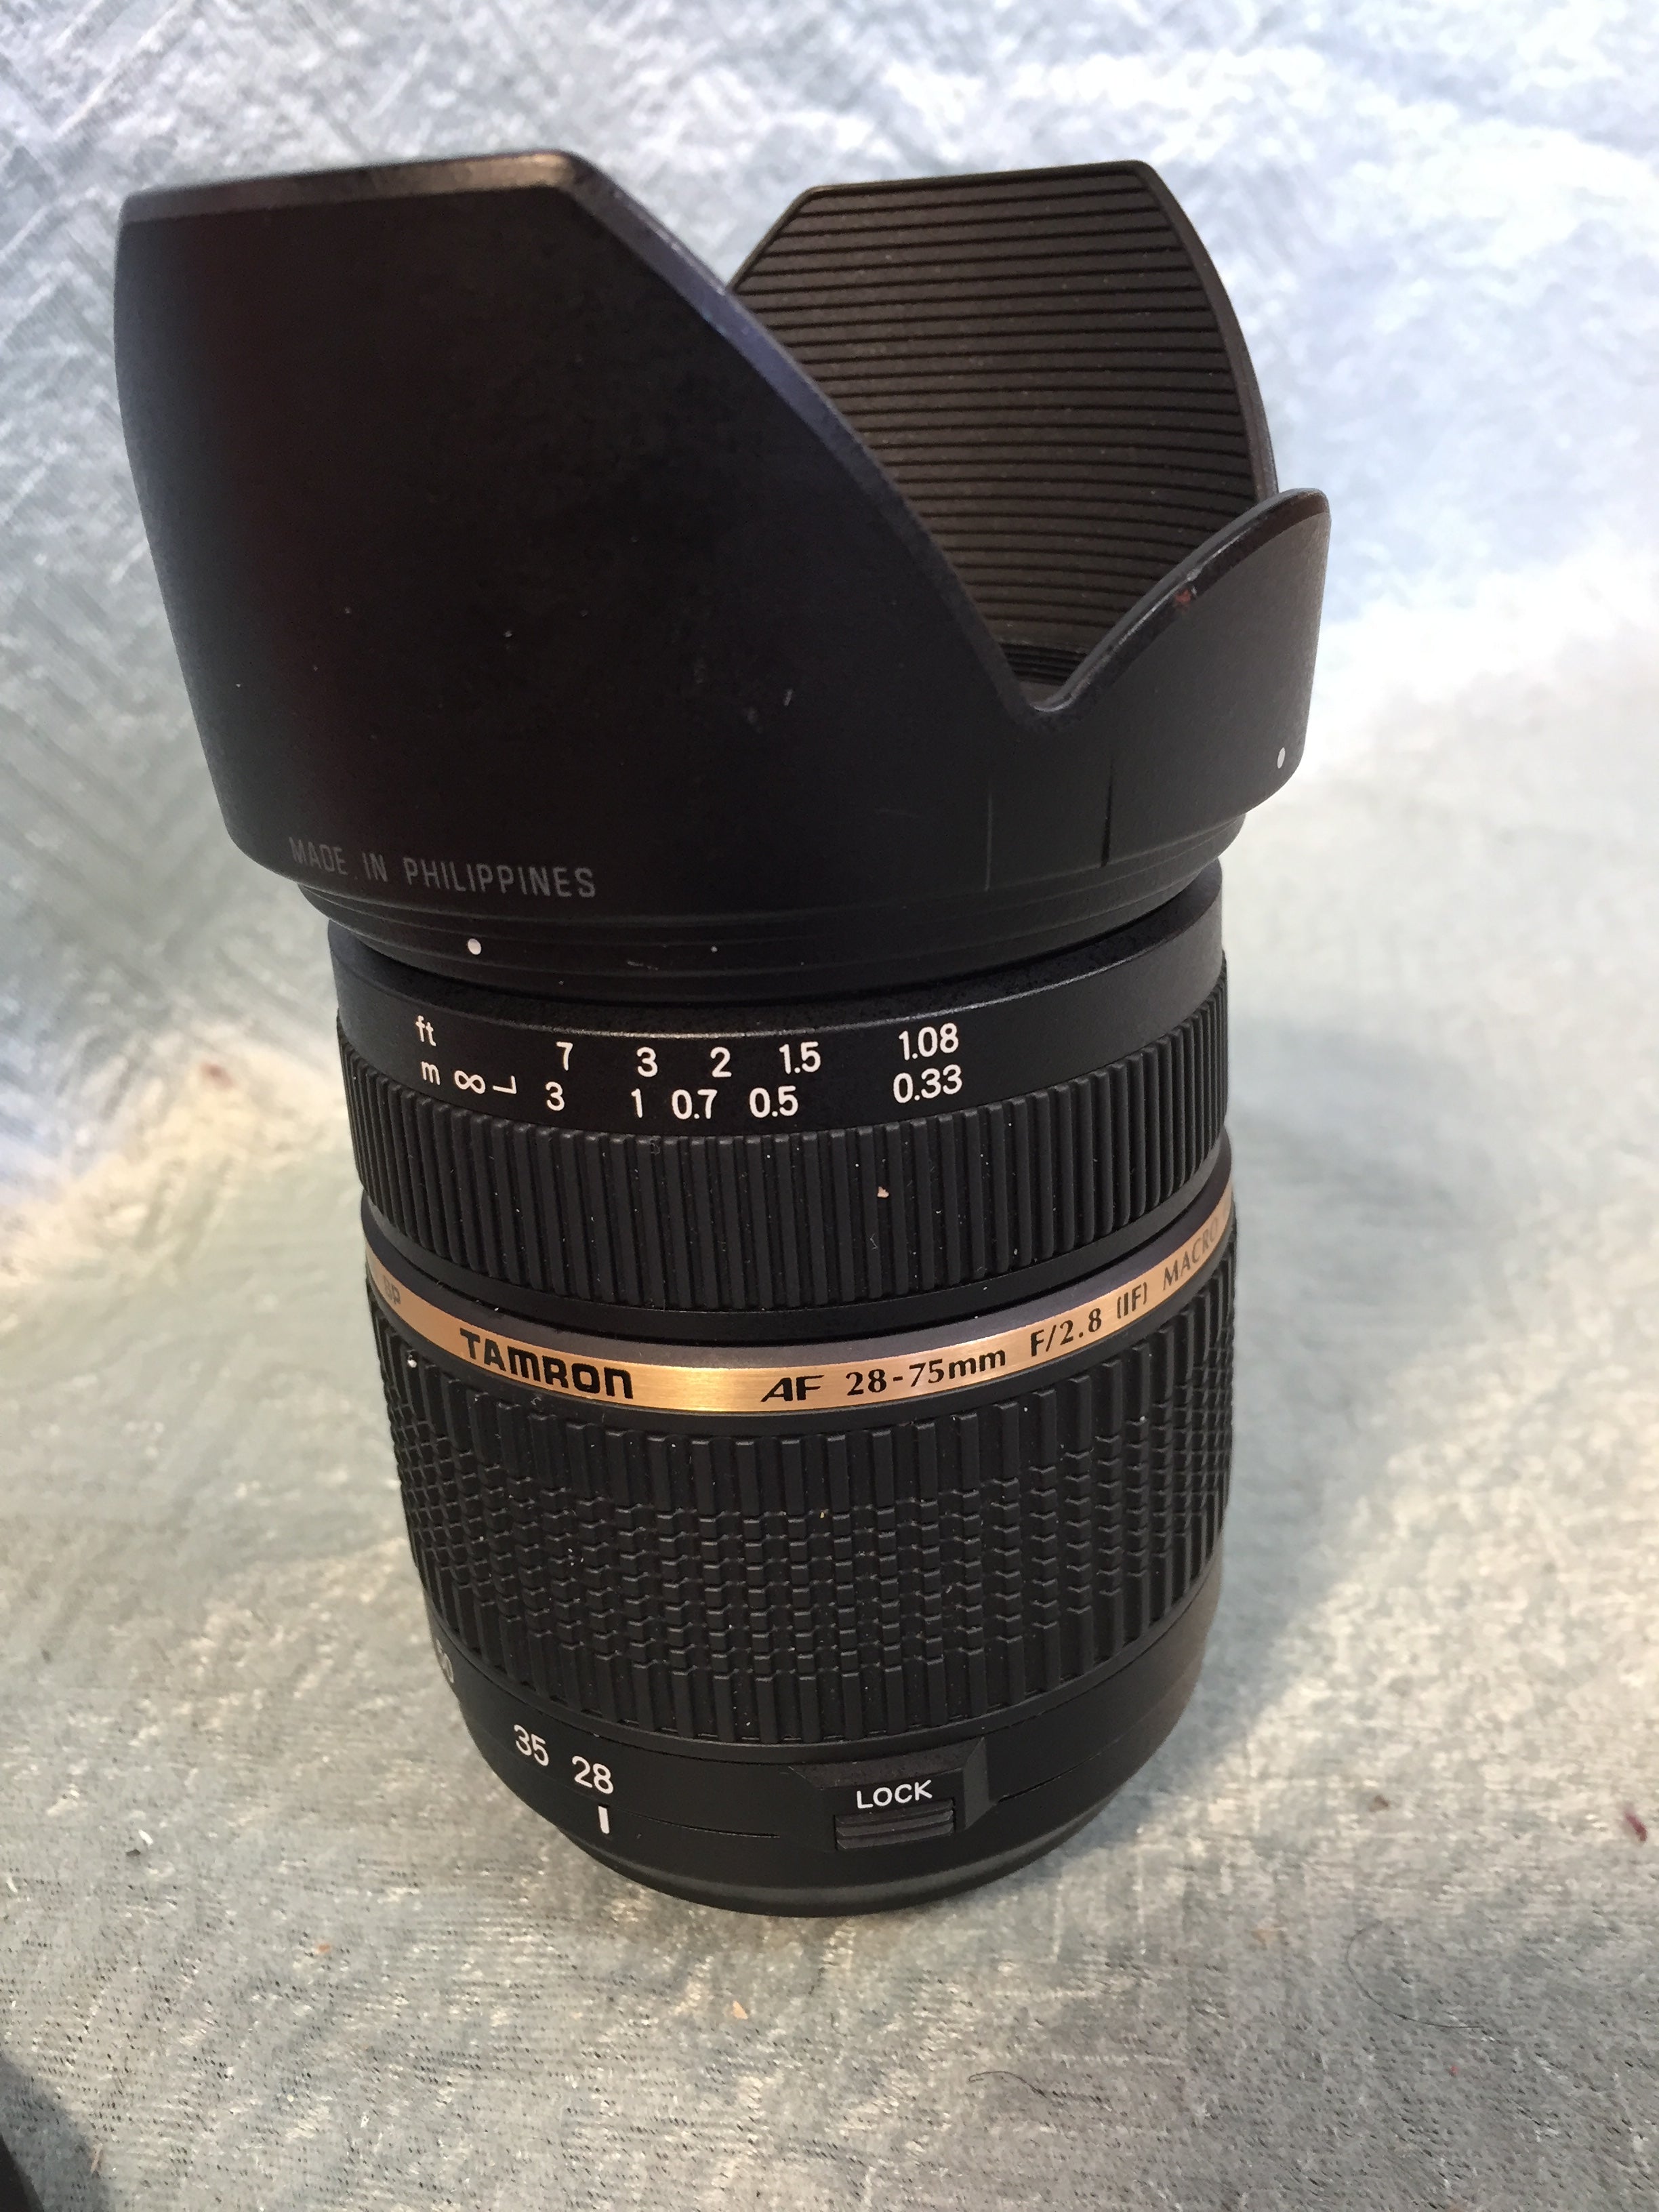 Tamron SP AF 28-75mm F/2.8 XR Di LD Aspherical [IF] Macro Lens for Nikon